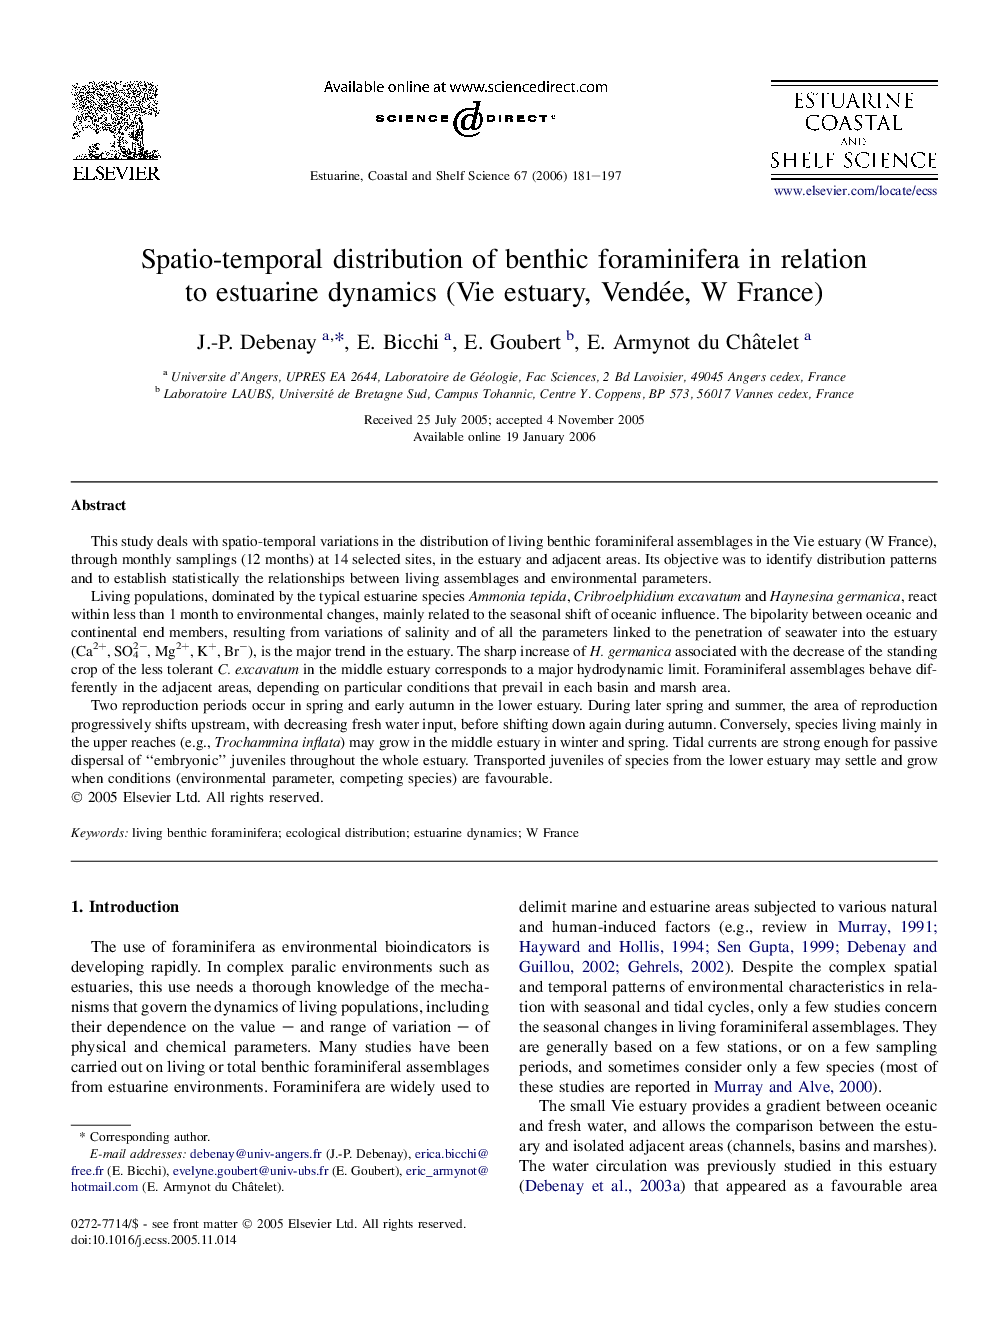 Spatio-temporal distribution of benthic foraminifera in relation to estuarine dynamics (Vie estuary, Vendée, W France)